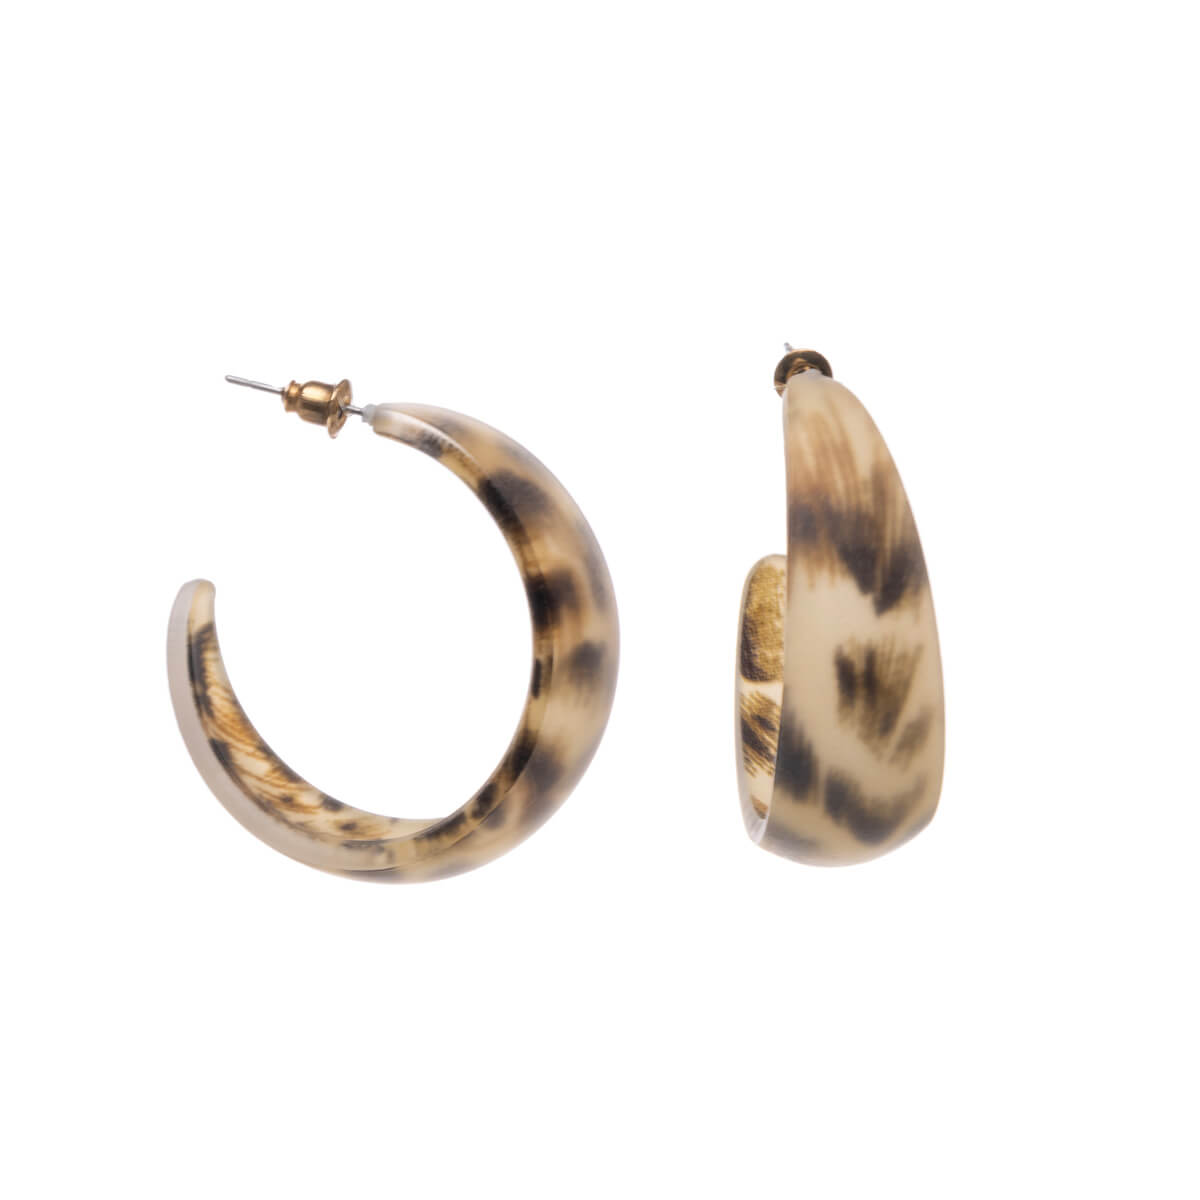 Plastic animal earrings 3cm